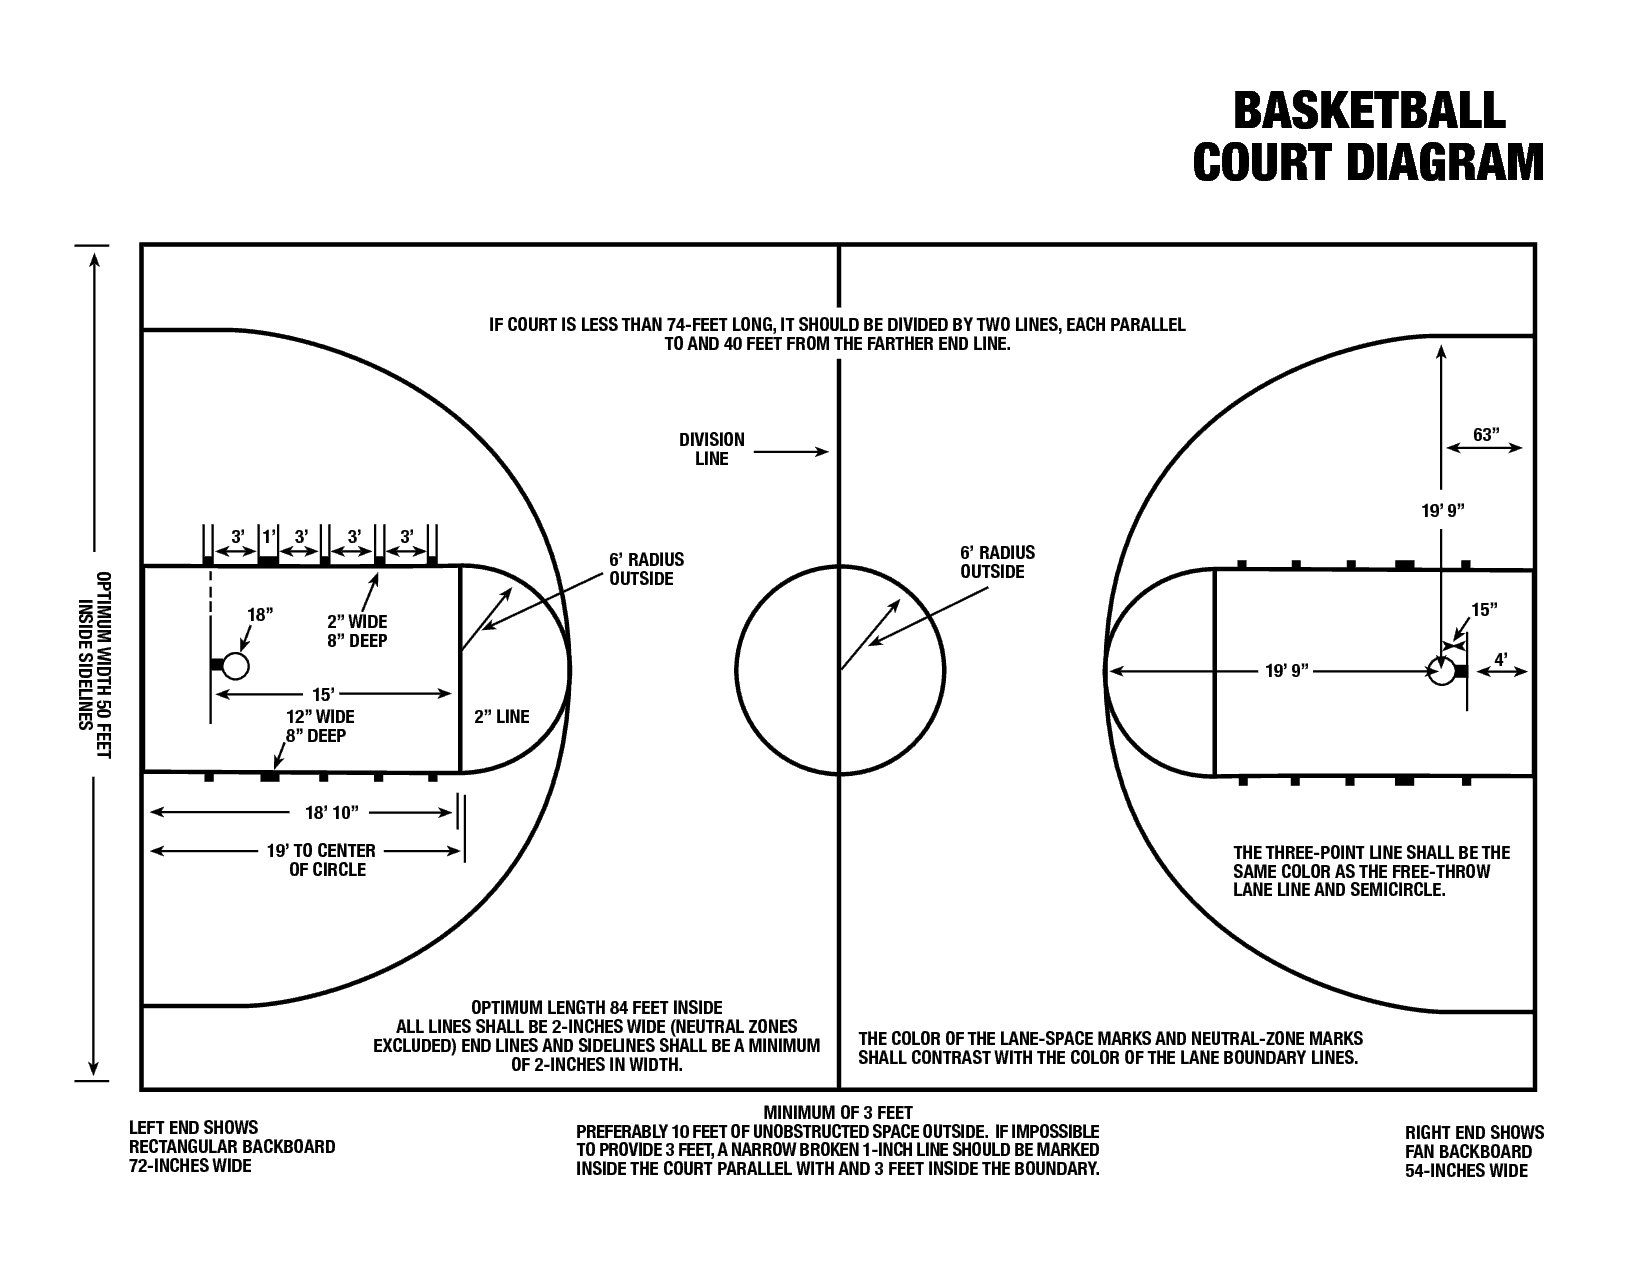 41 blank basketball court diagrams